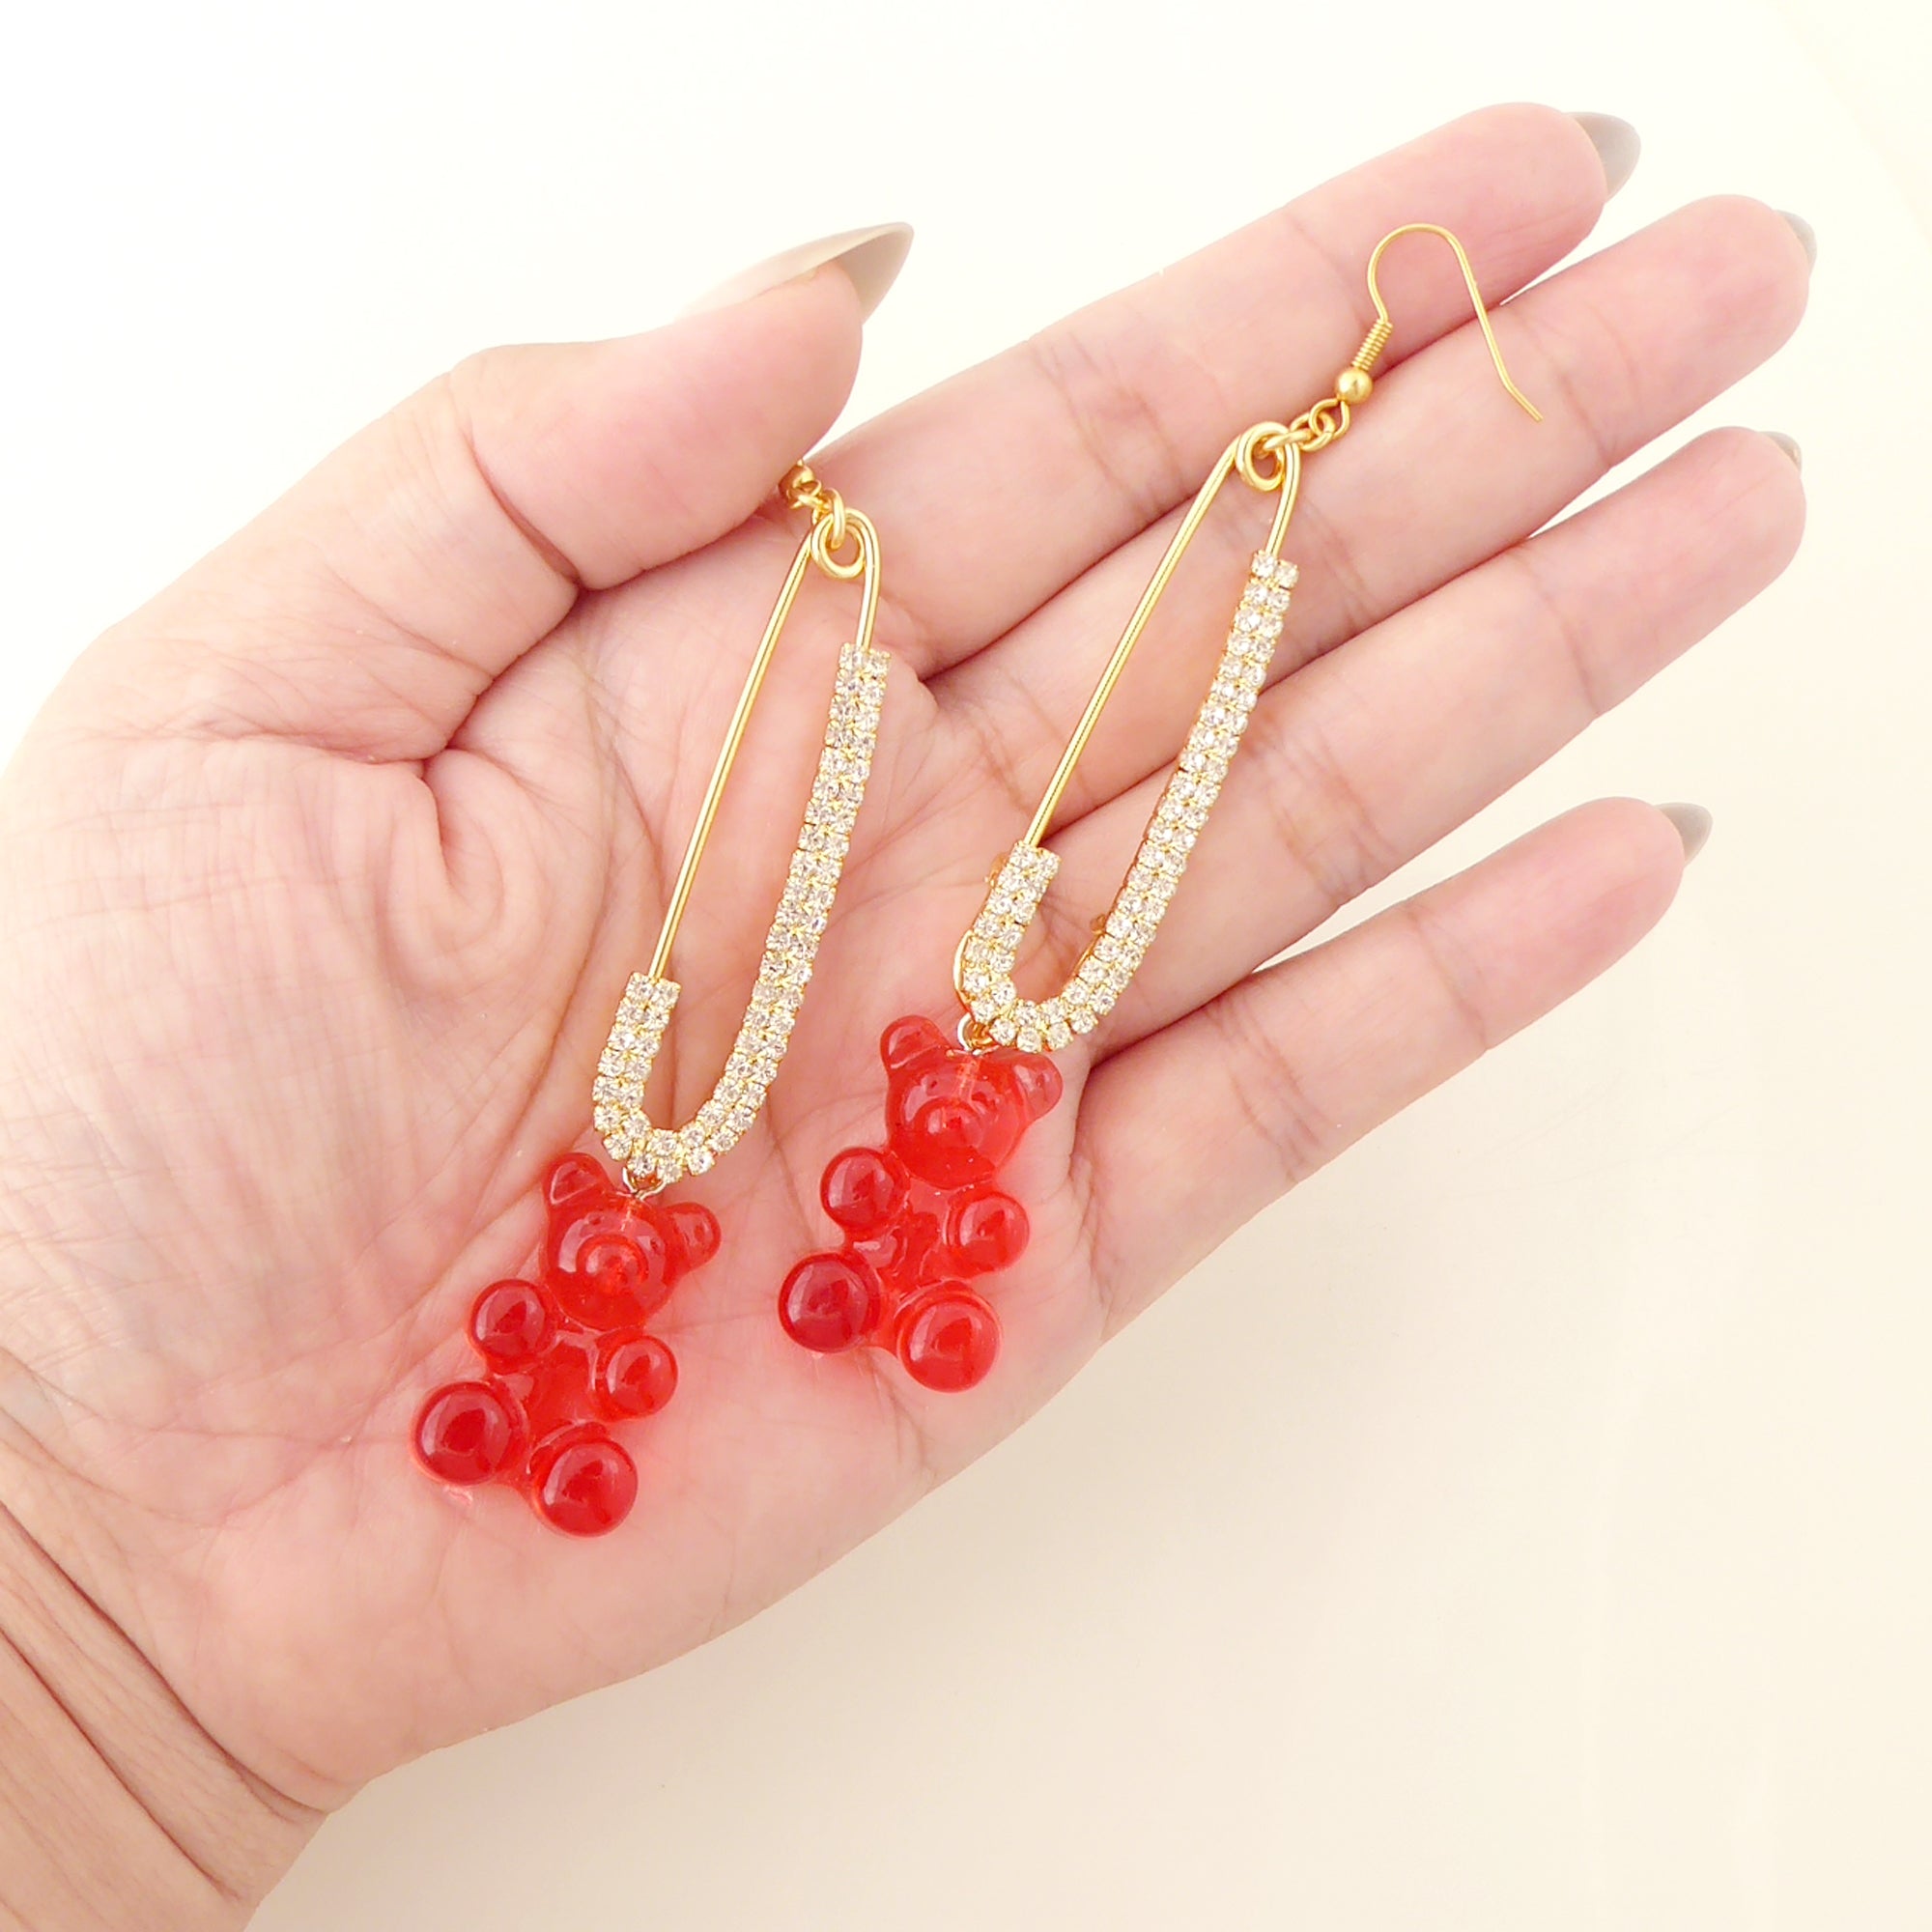 Red gummy bear earrings by Jenny Dayco 4